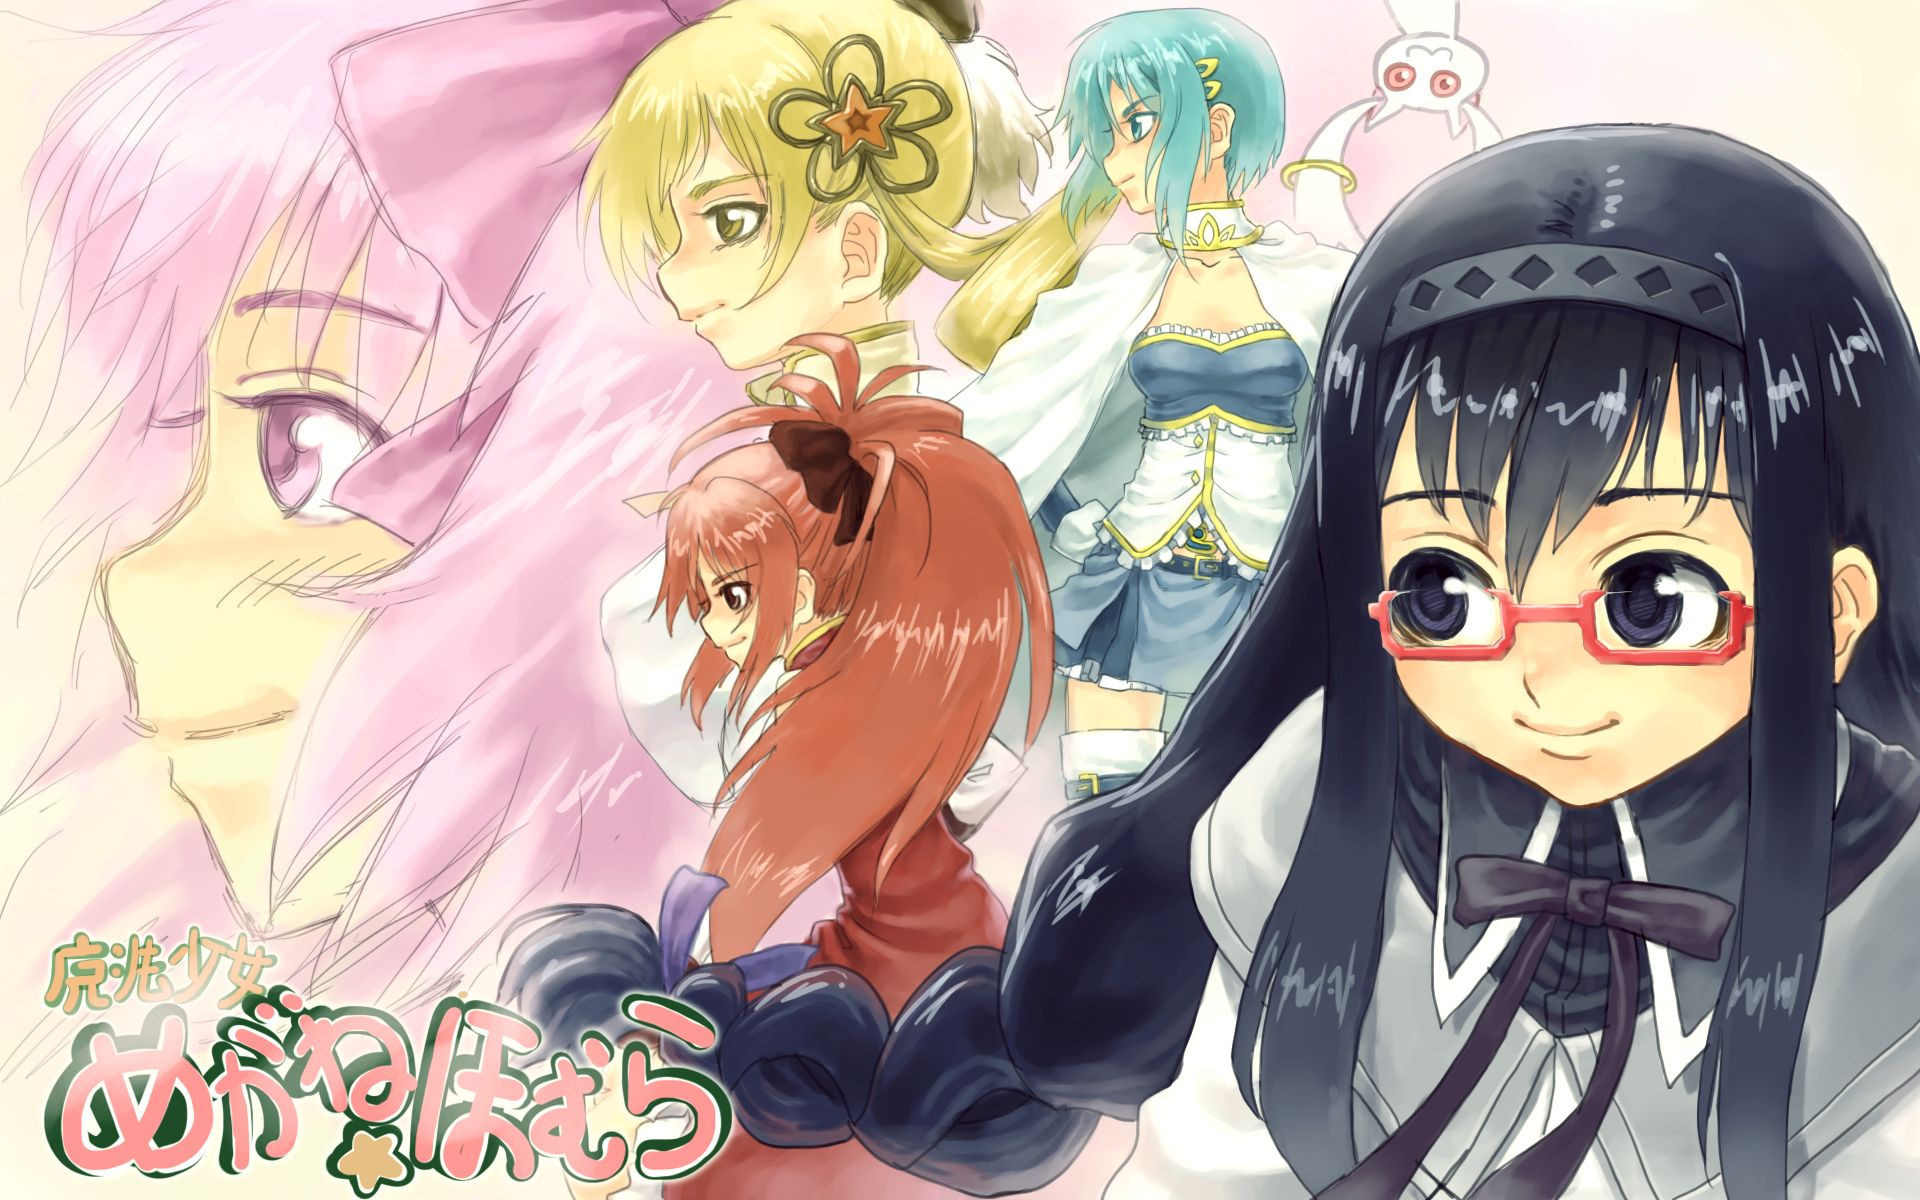 Baixe gratuitamente a imagem Anime, Kyōko Sakura, Mahô Shôjo Madoka Magika: Puella Magi Madoka Magica, Homura Akemi, Madoka Kaname, Mami Tomoe, Sayaka Miki, Kyuubey (Puella Magi Madoka Magica) na área de trabalho do seu PC